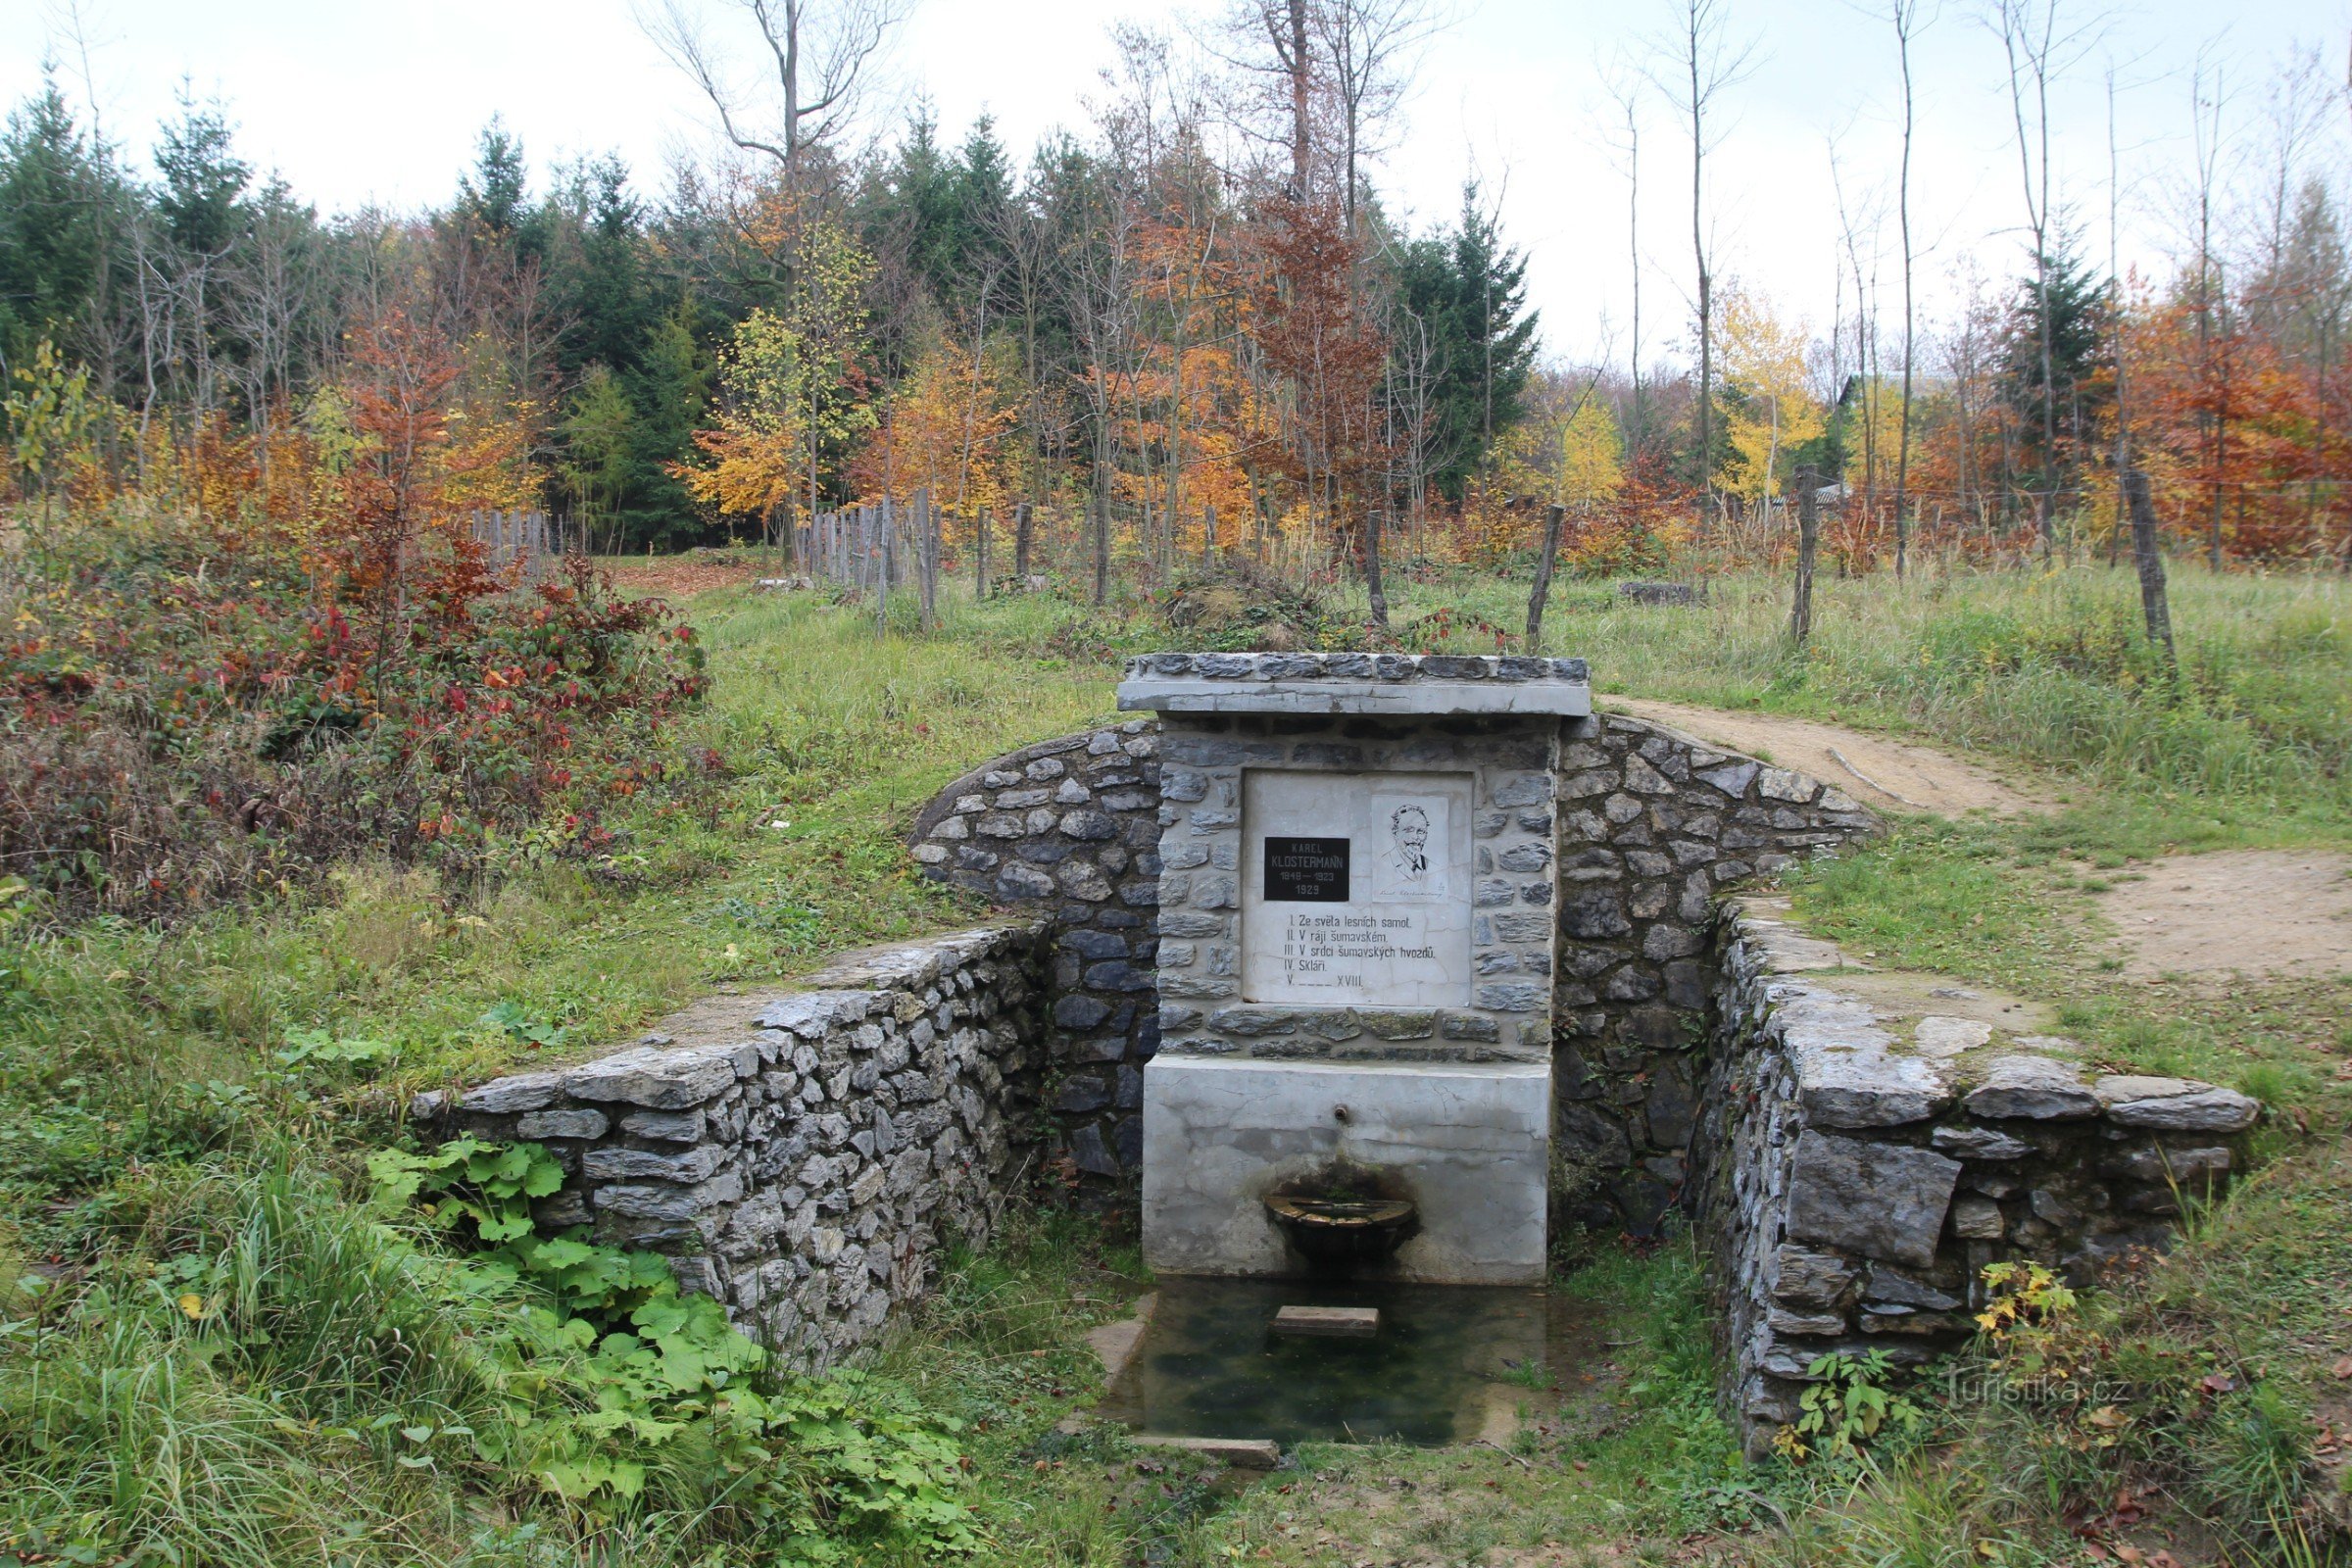 Klostermann's well